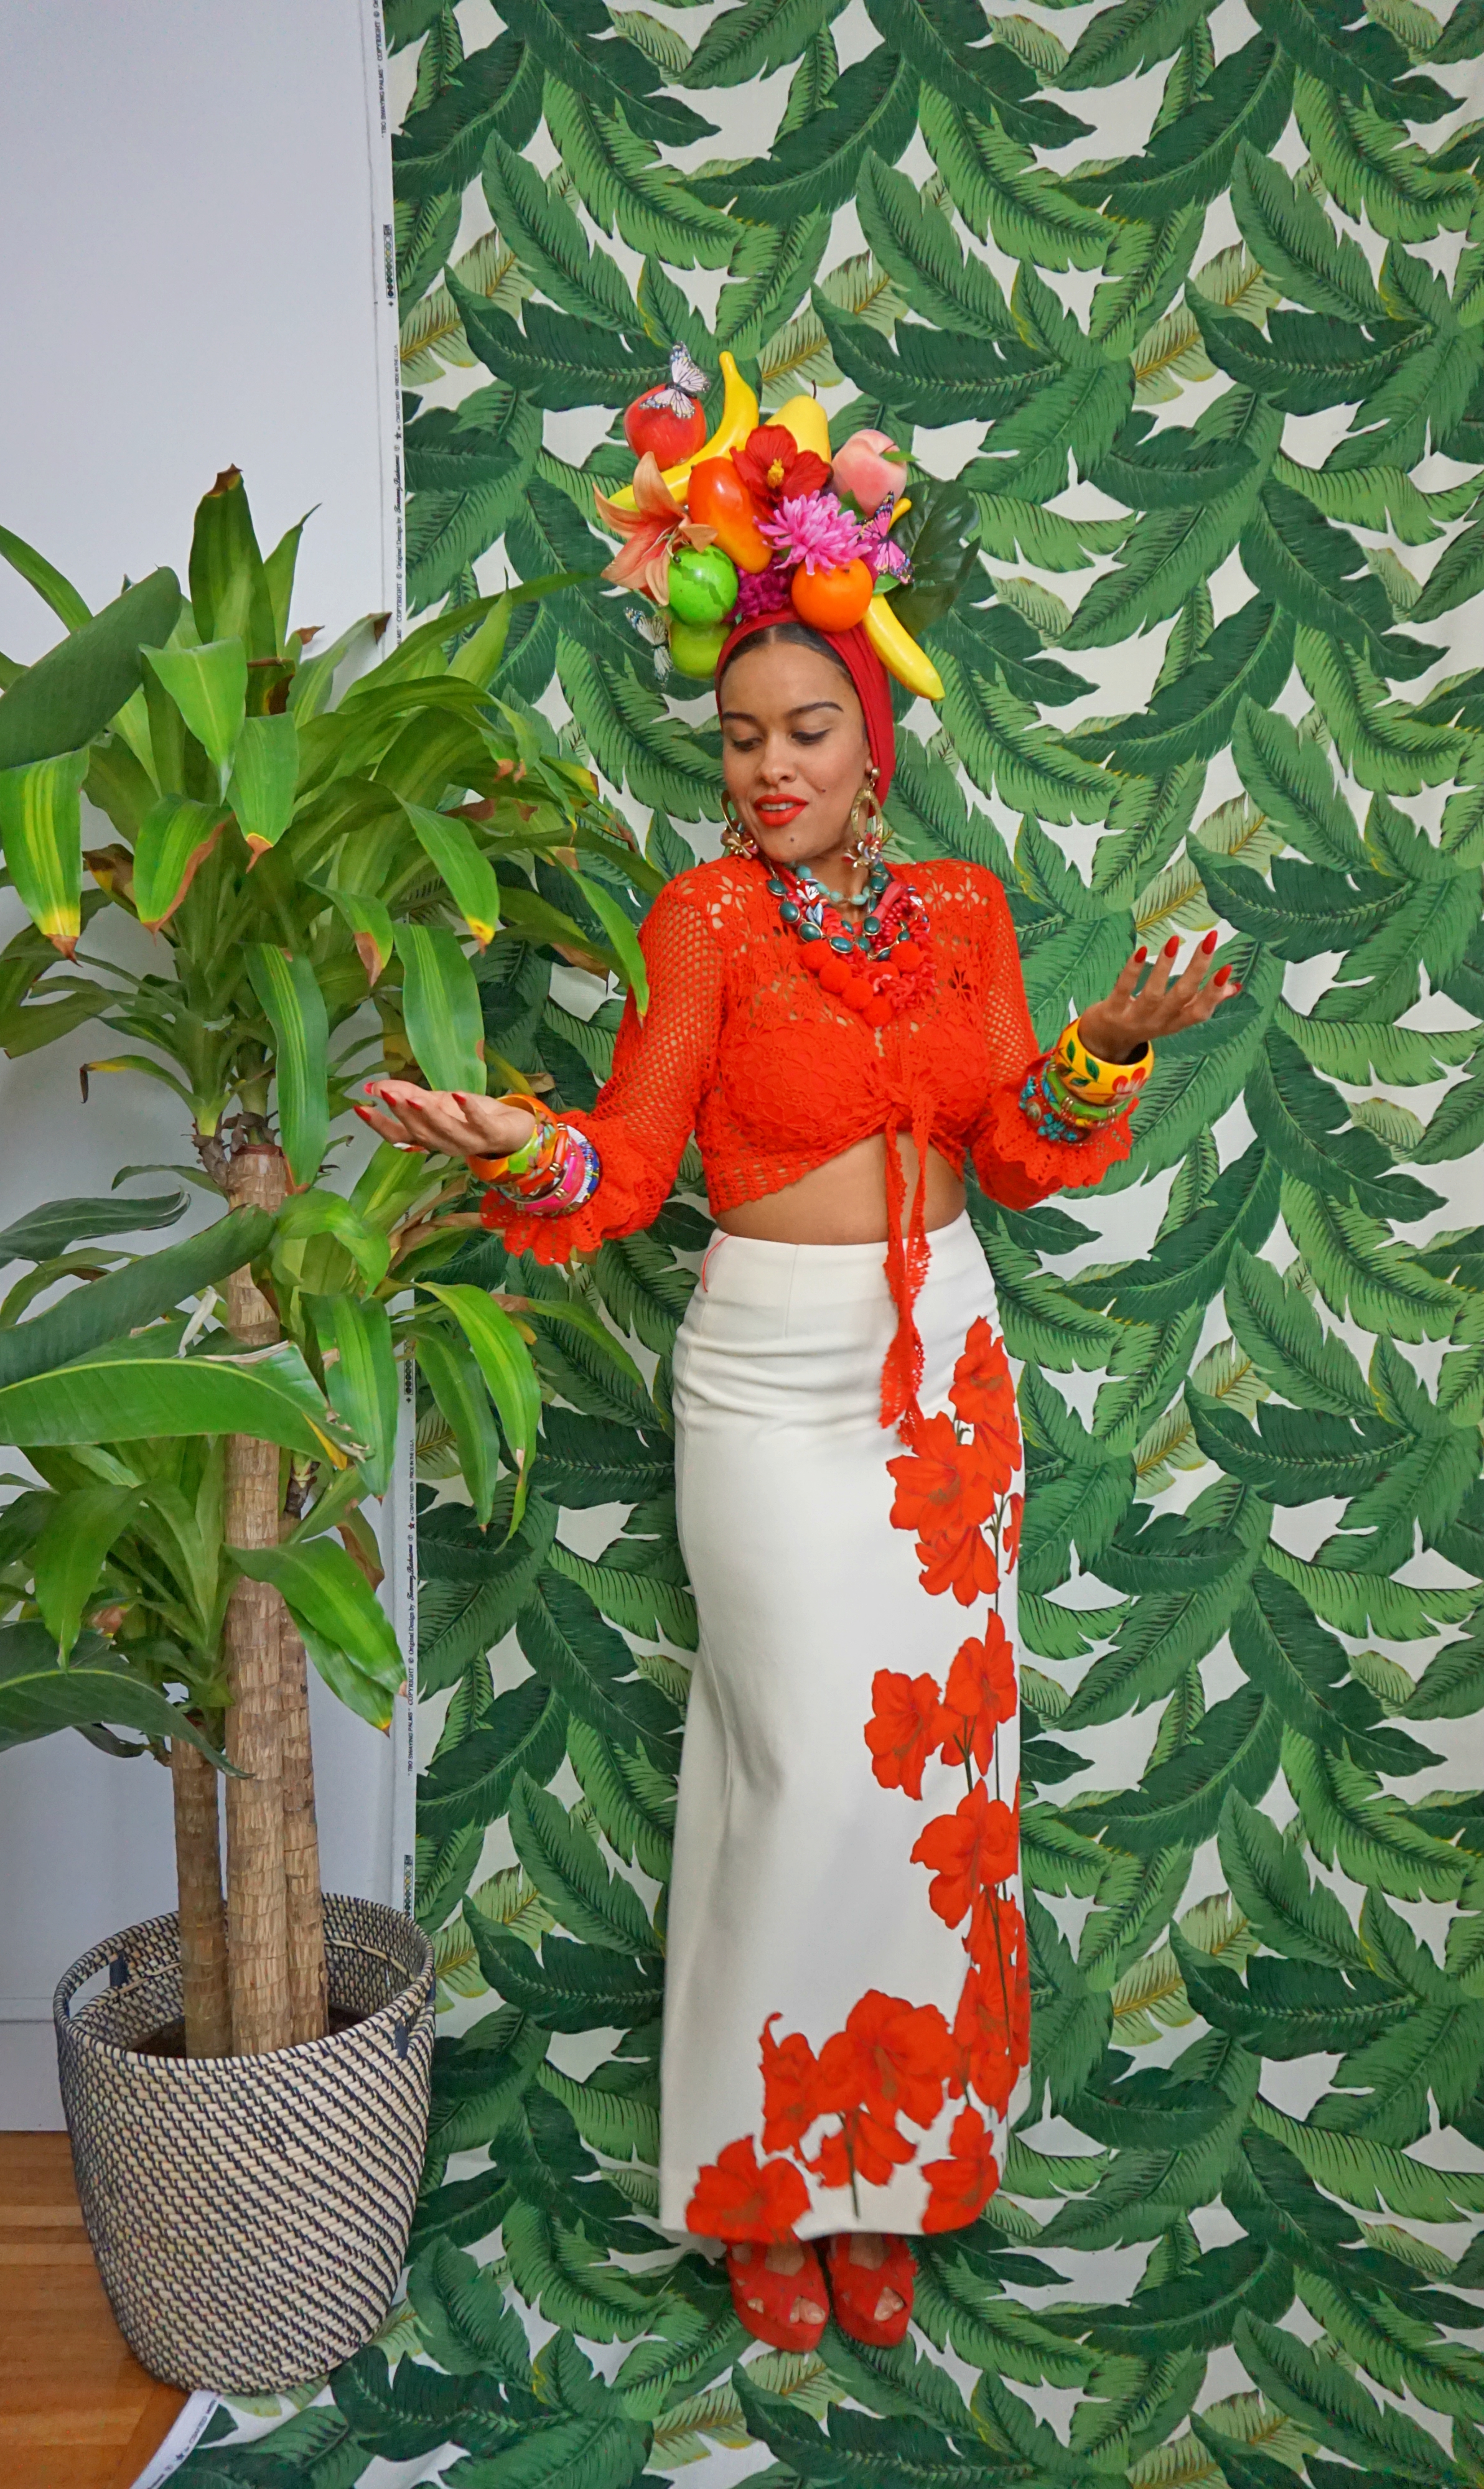 Mens Ladies Tropical Fruit Carmen Miranda Summer Fancy Dress Costume Outfit Hat 